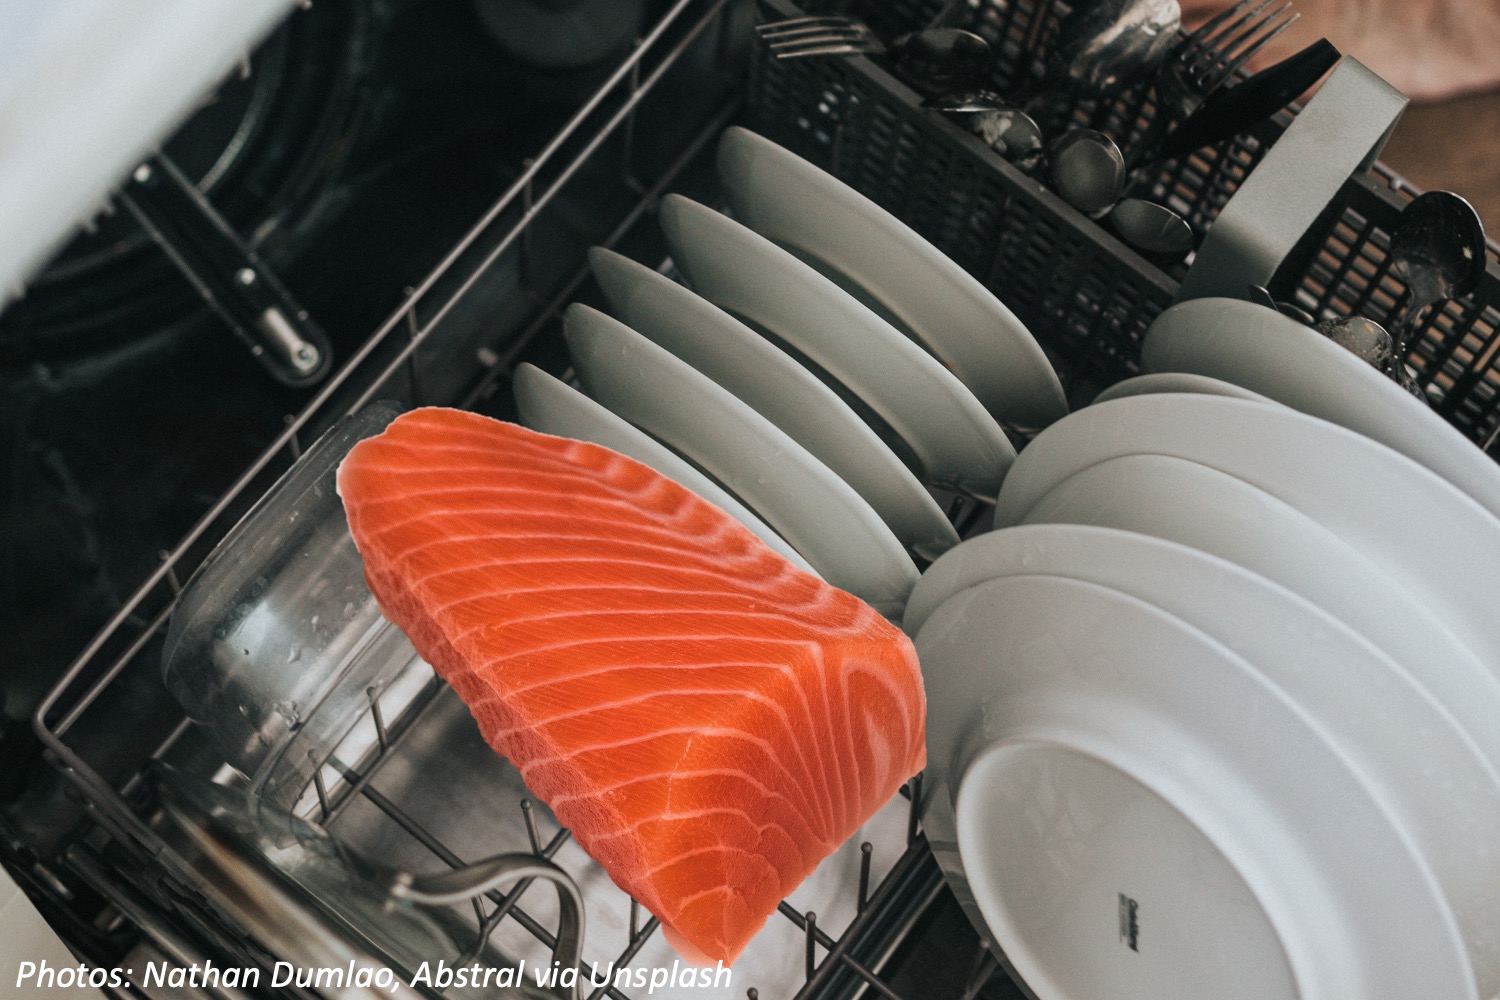 From Dishwasher to Fishwasher